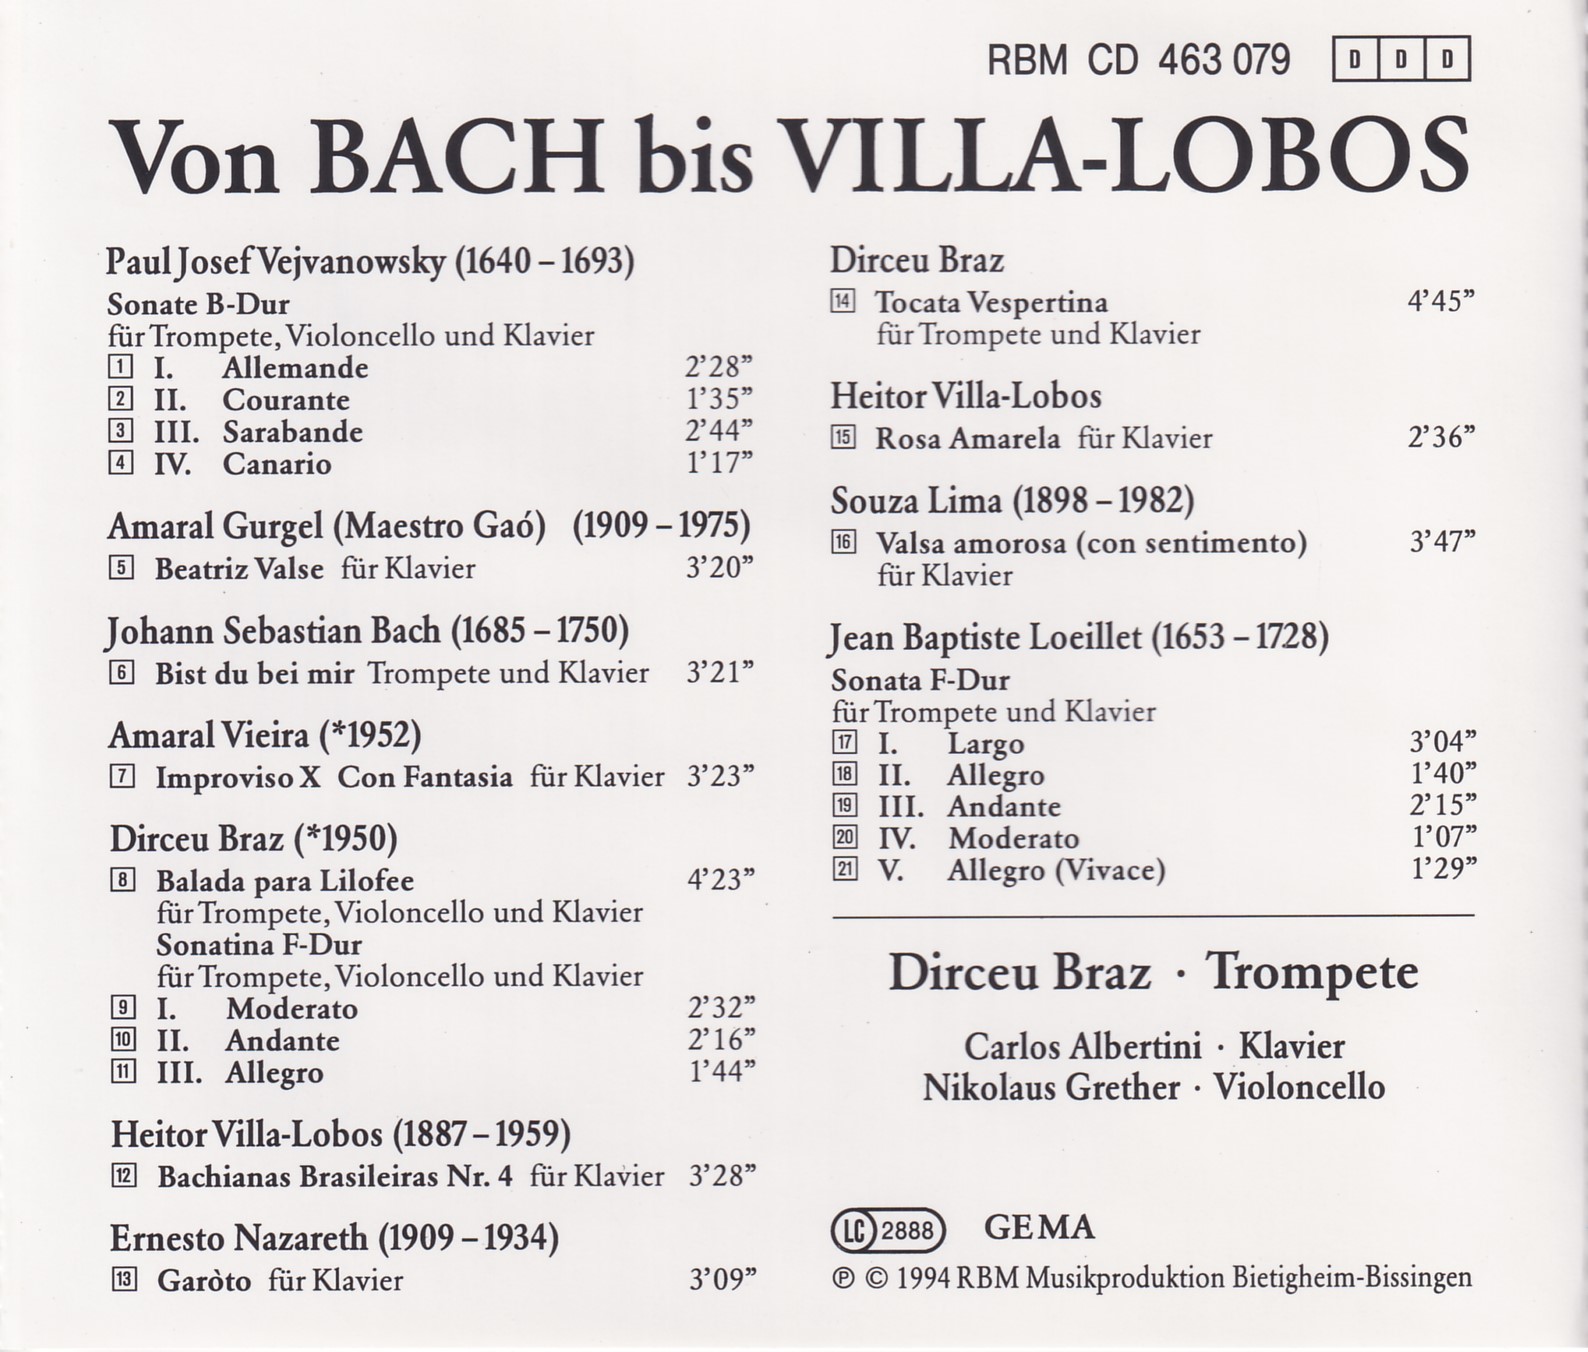 Von Bach bis Villa-Lobos - Dirceu Braz